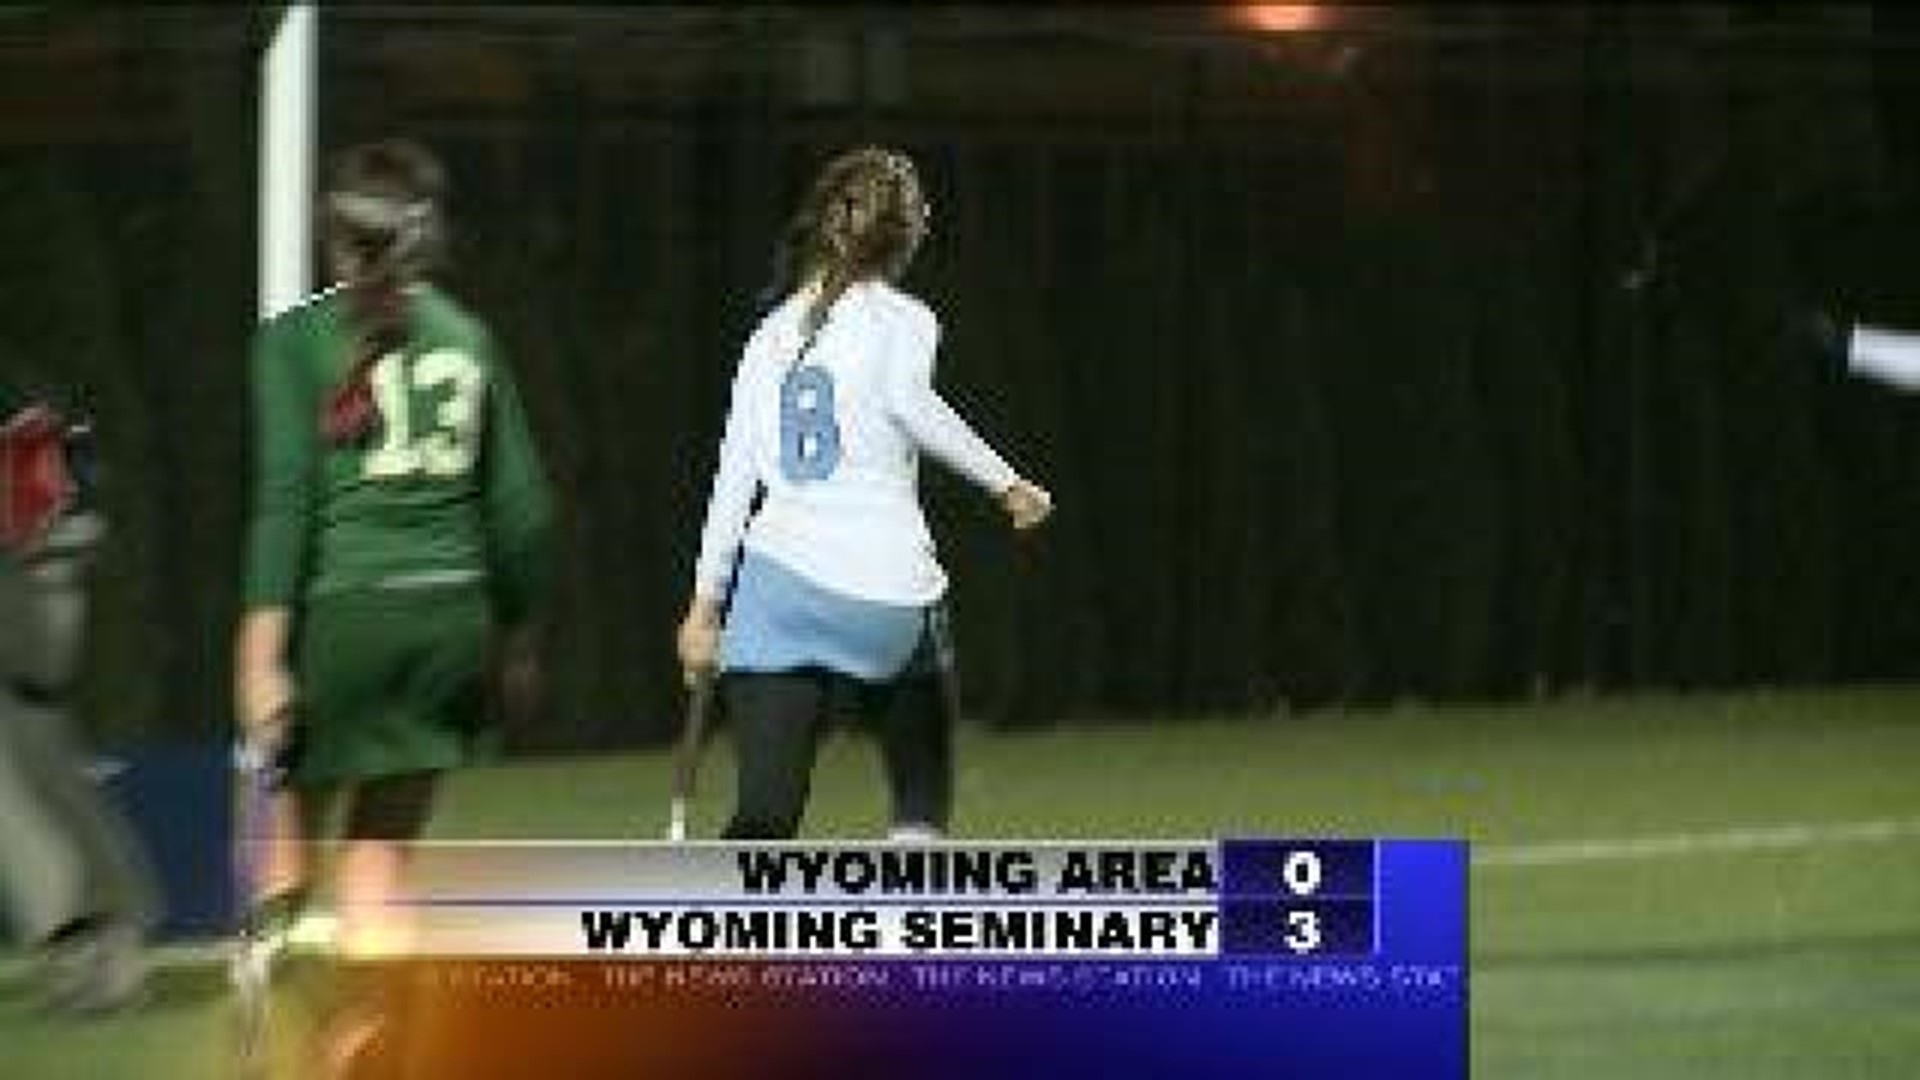 Wyoming Area vs Wyoming Seminary Field Hockey